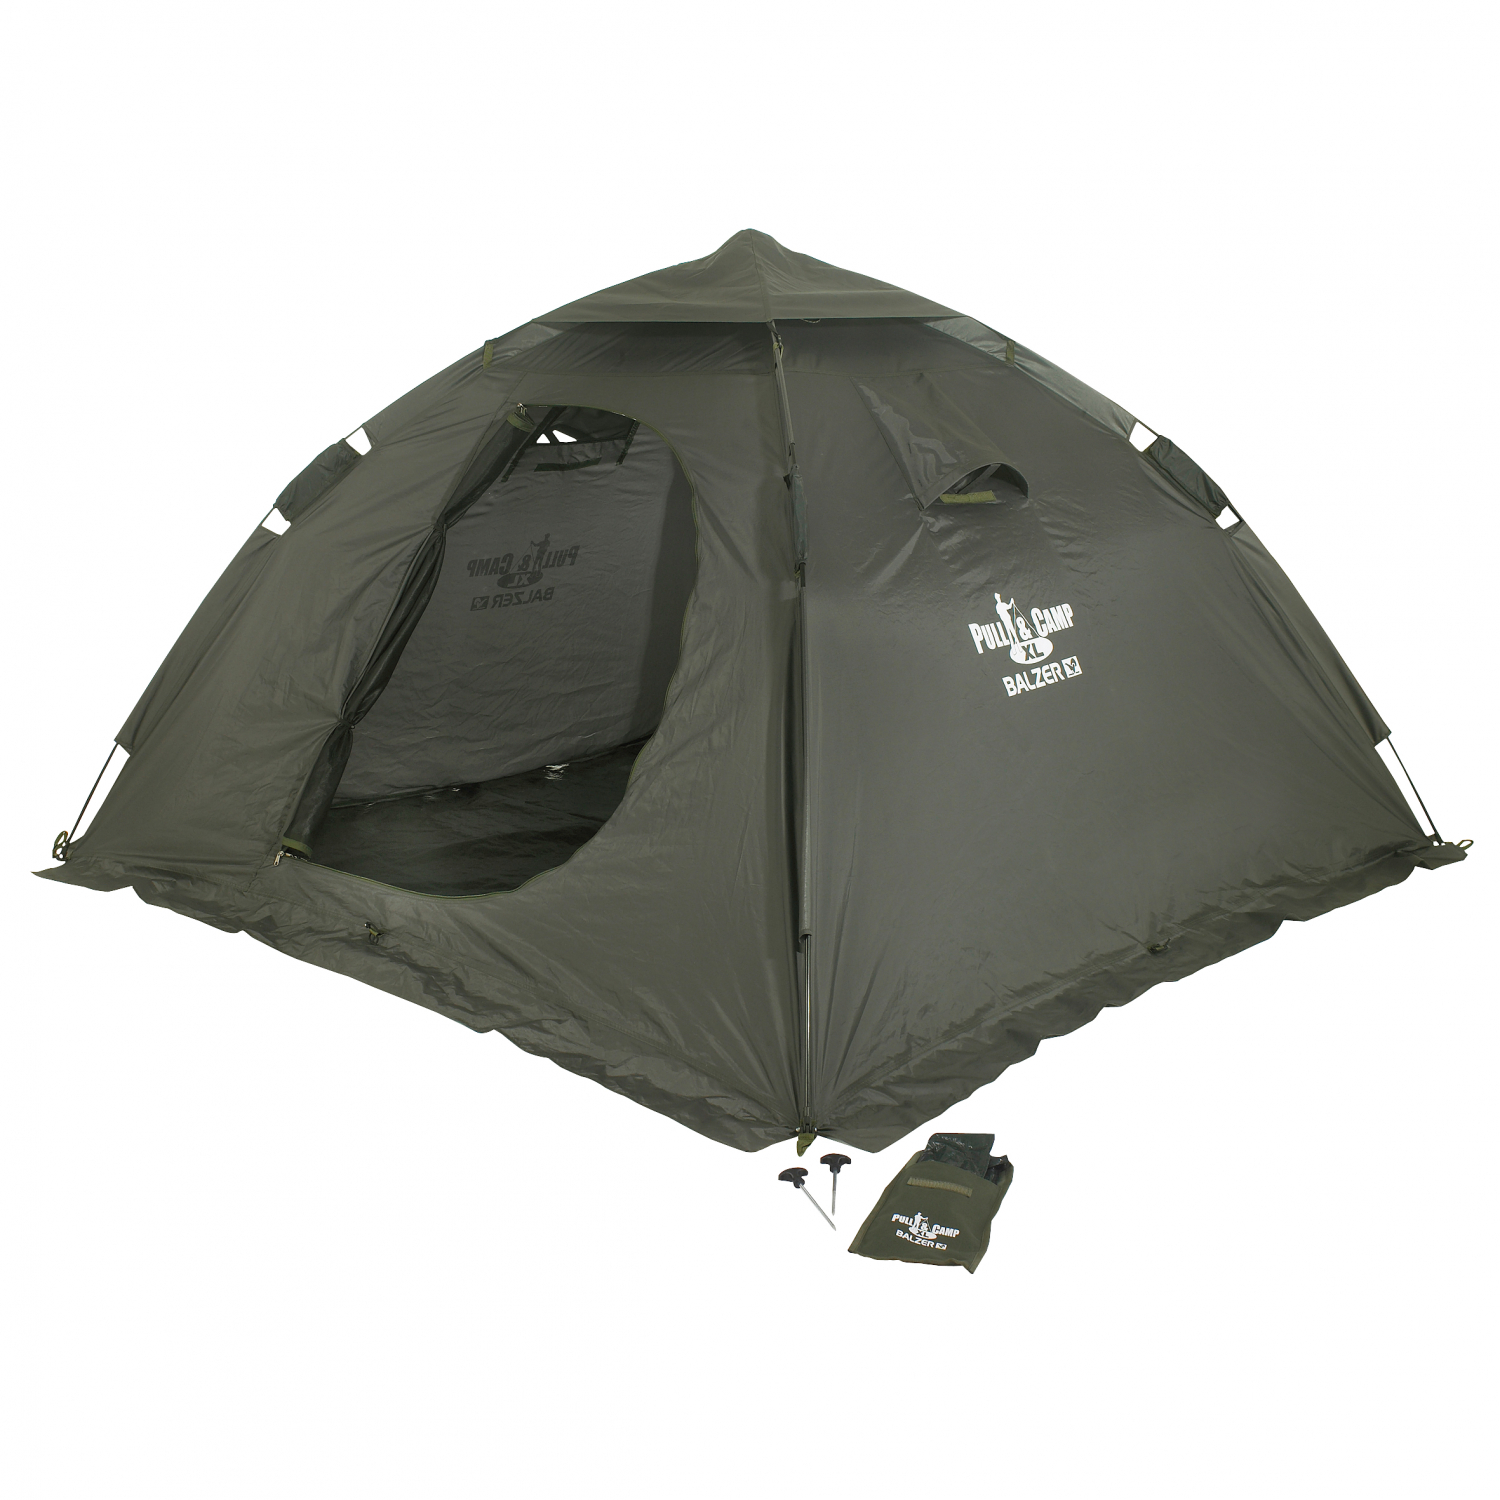 Balzer Tent Pull & Camp XL 